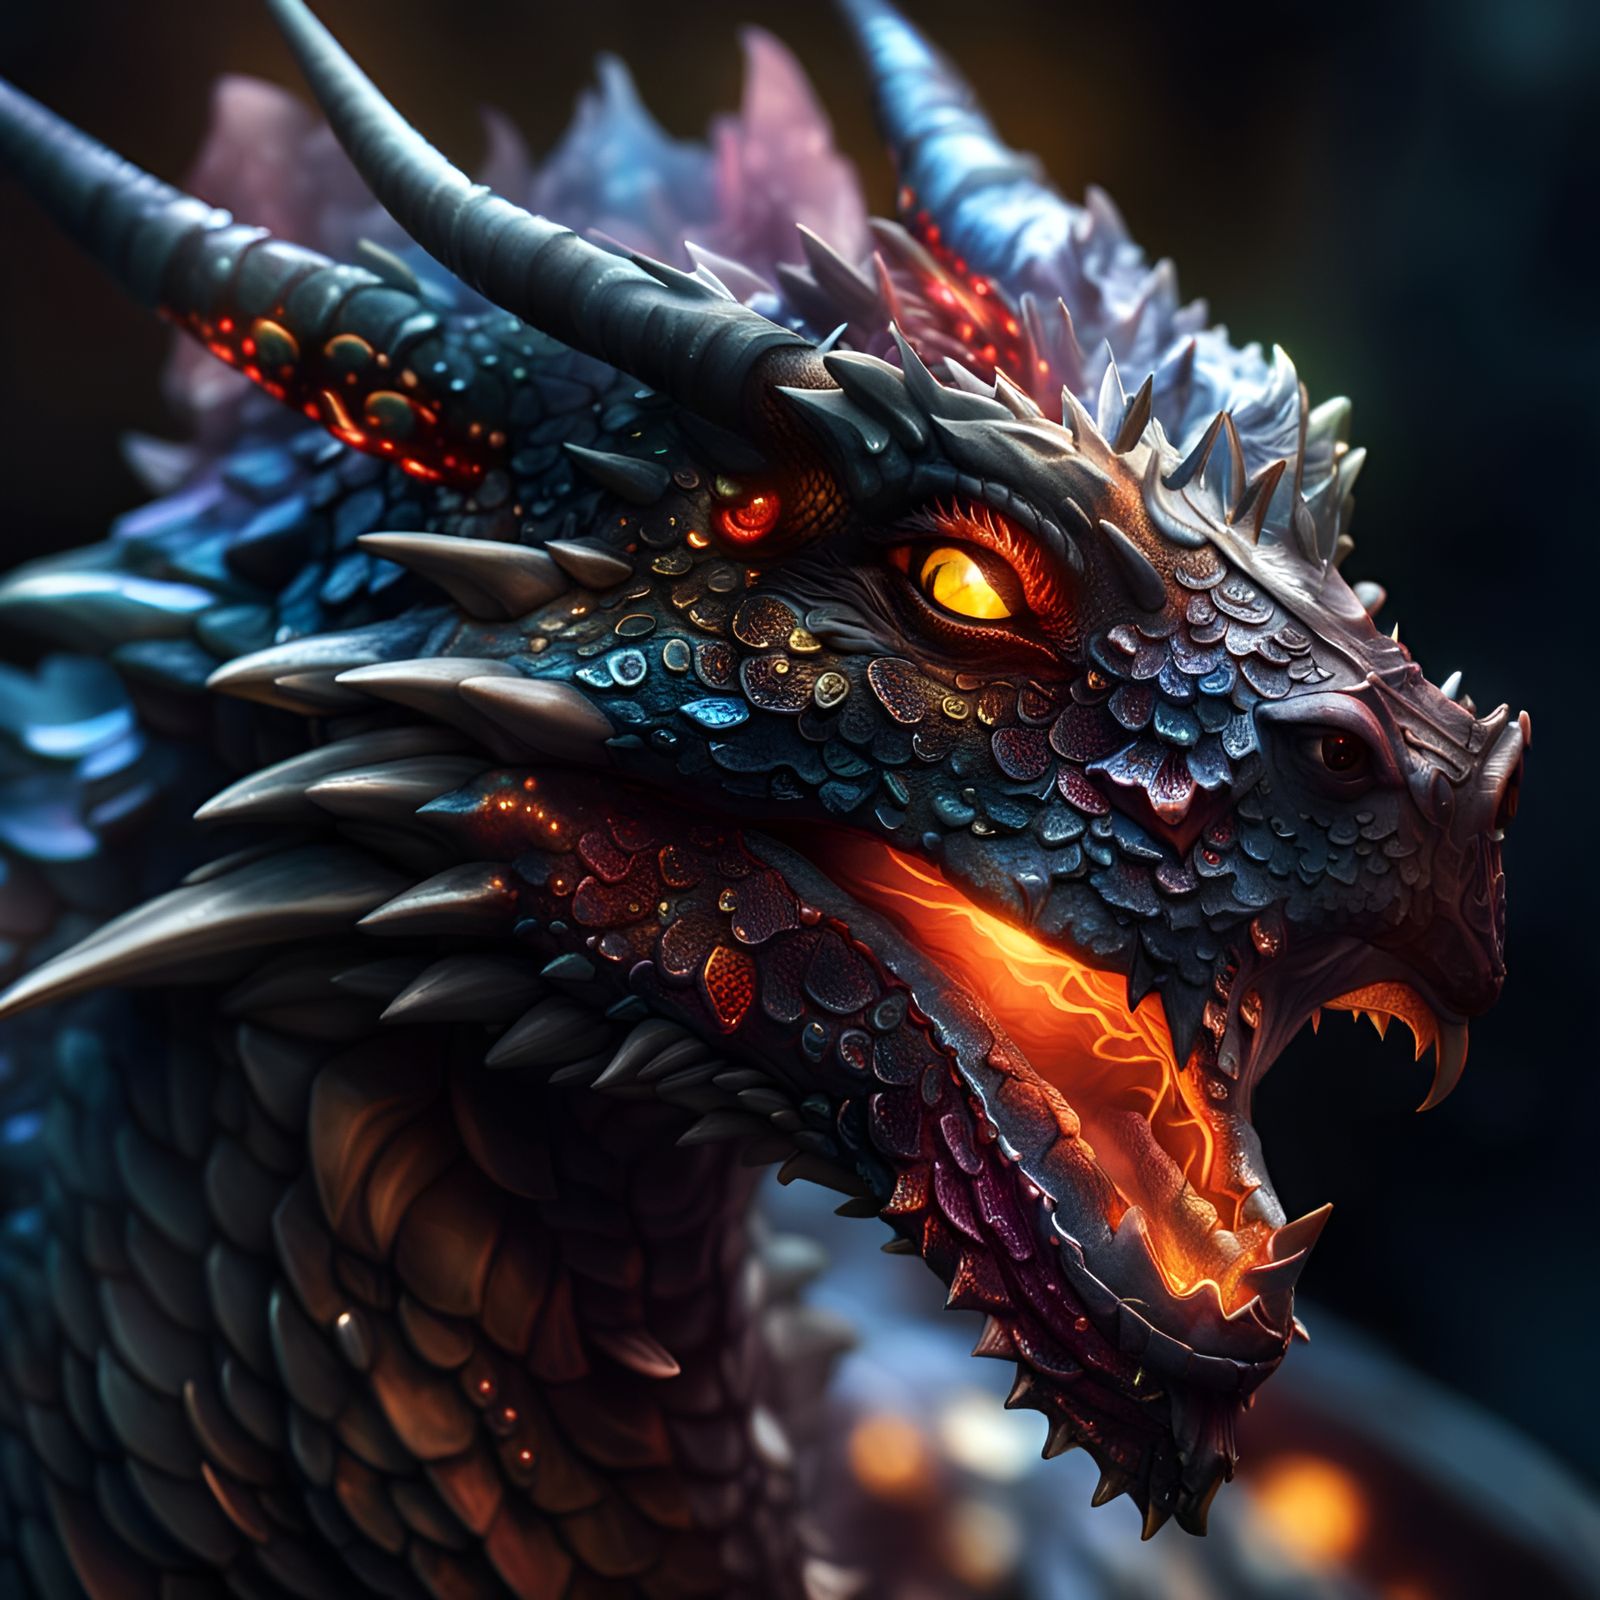 Portrait of a Dragon v5